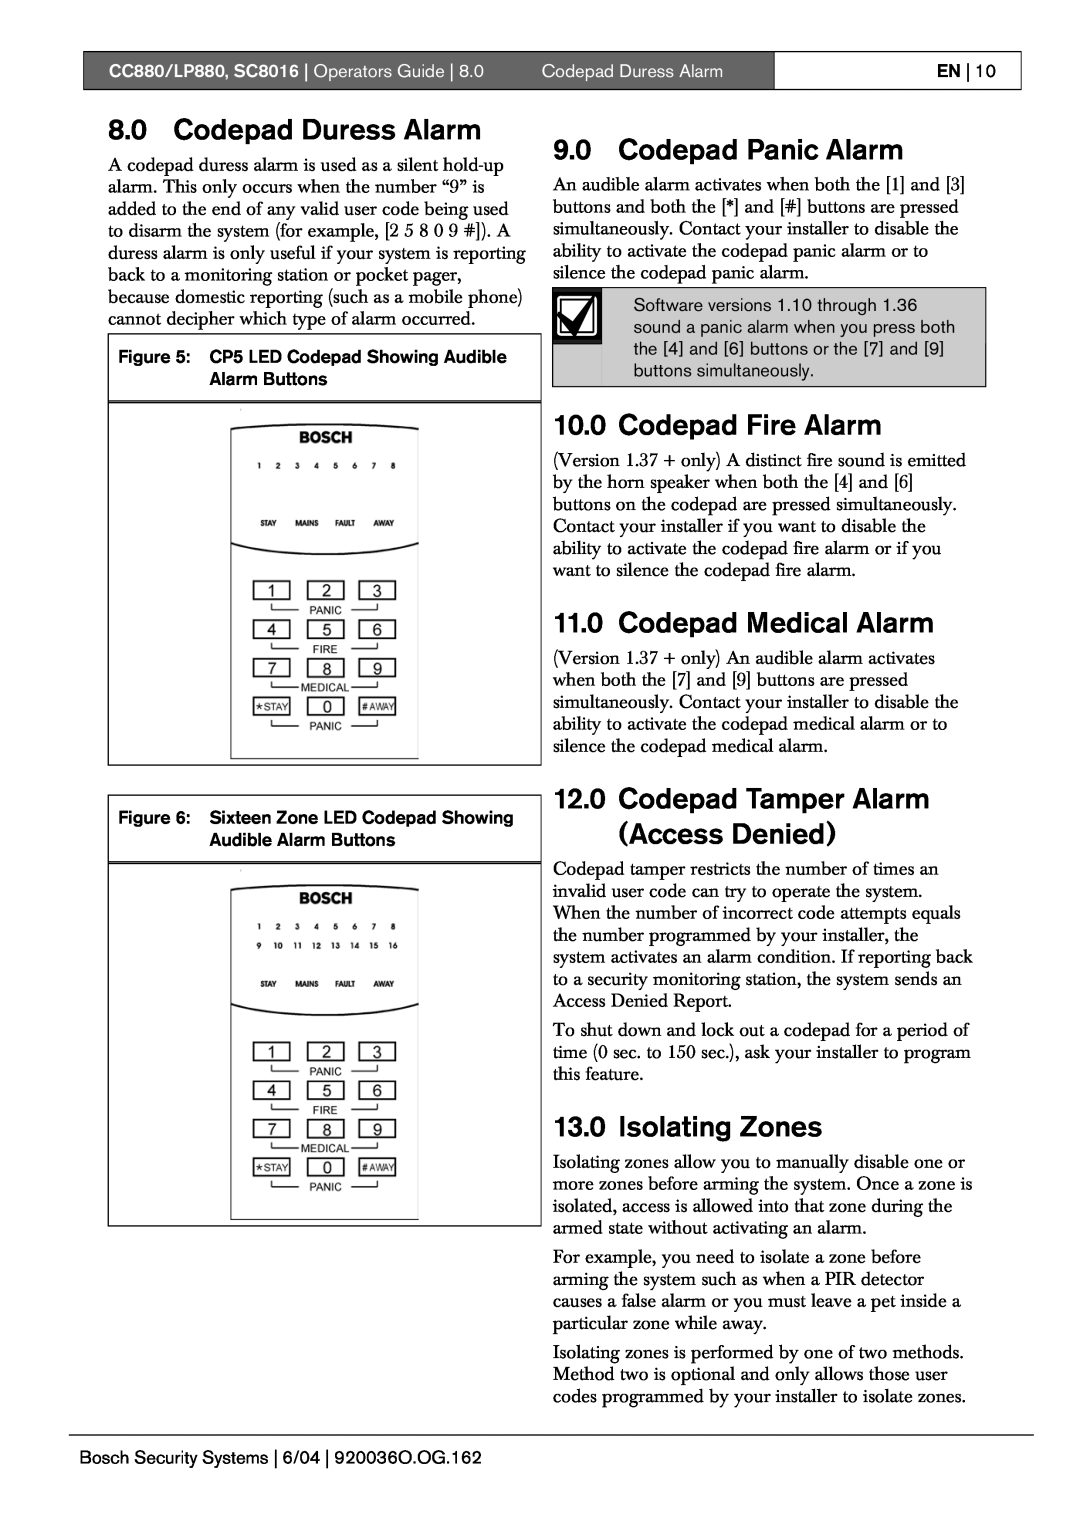 Bosch Appliances CC880, LP880 manual Codepad Duress Alarm, Codepad Panic Alarm, Codepad Fire Alarm, Codepad Medical Alarm 